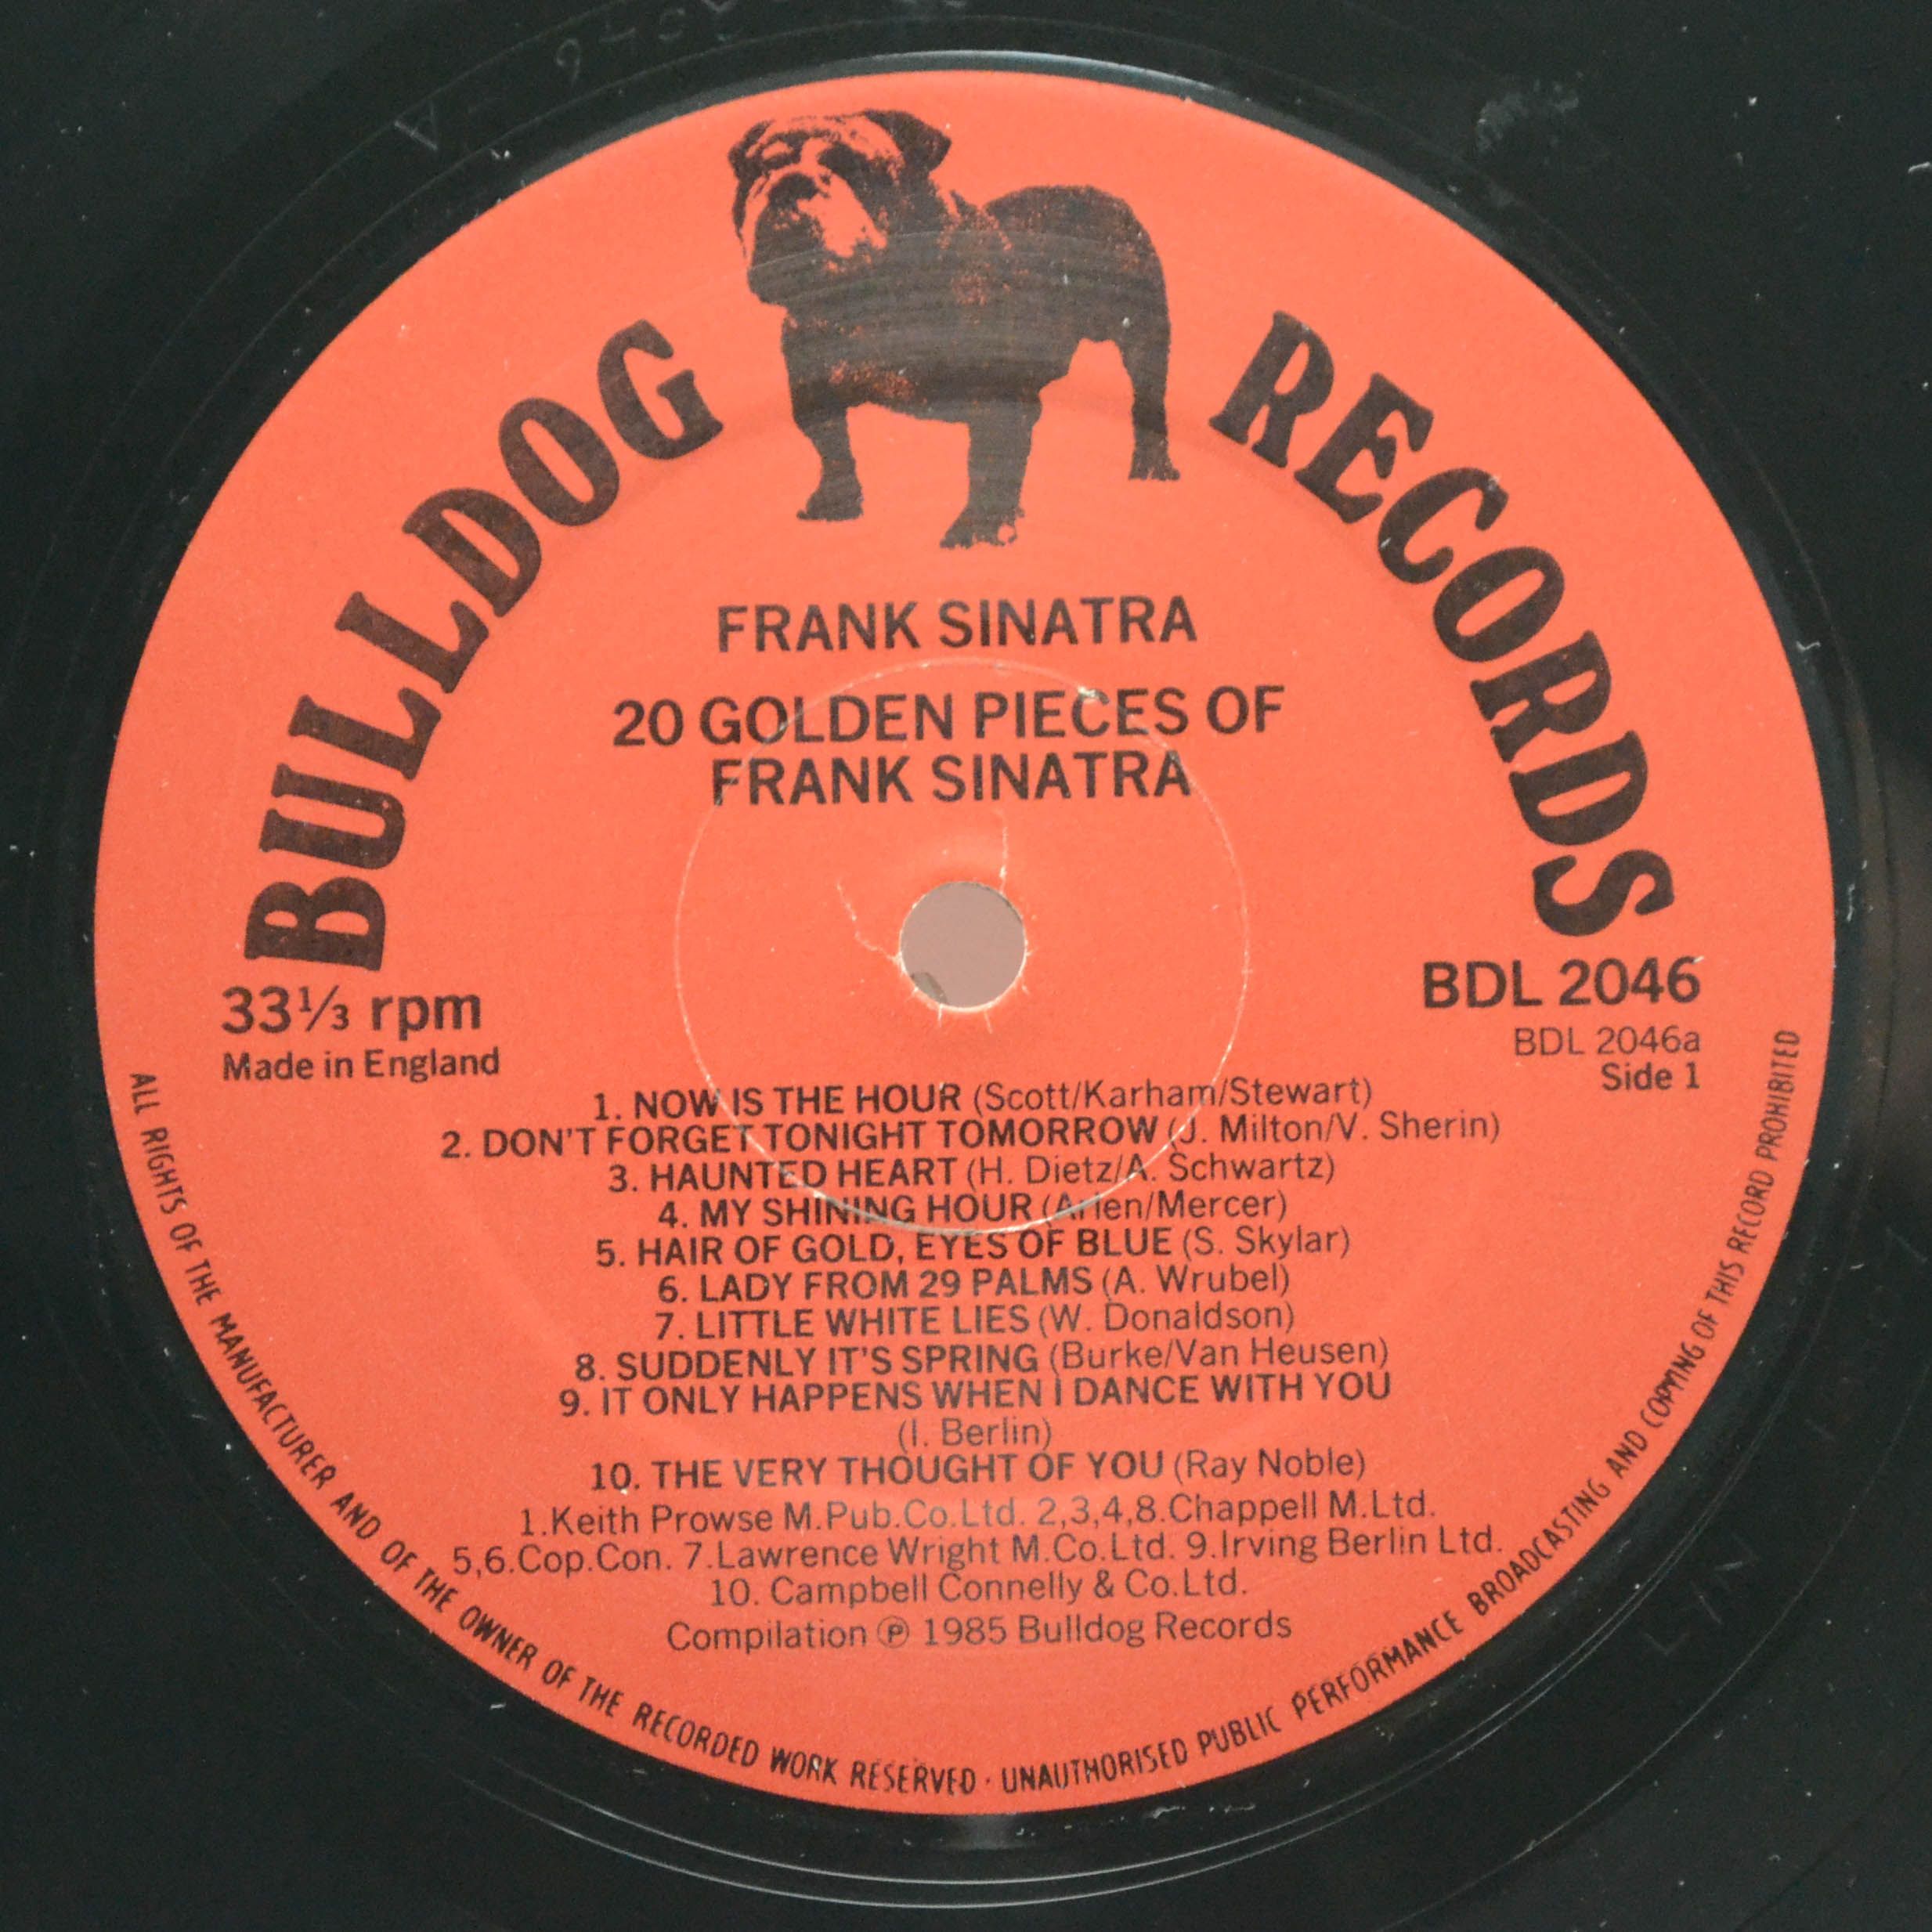 Frank Sinatra — 20 Golden Pieces of Frank Sinatra (UK), 1985